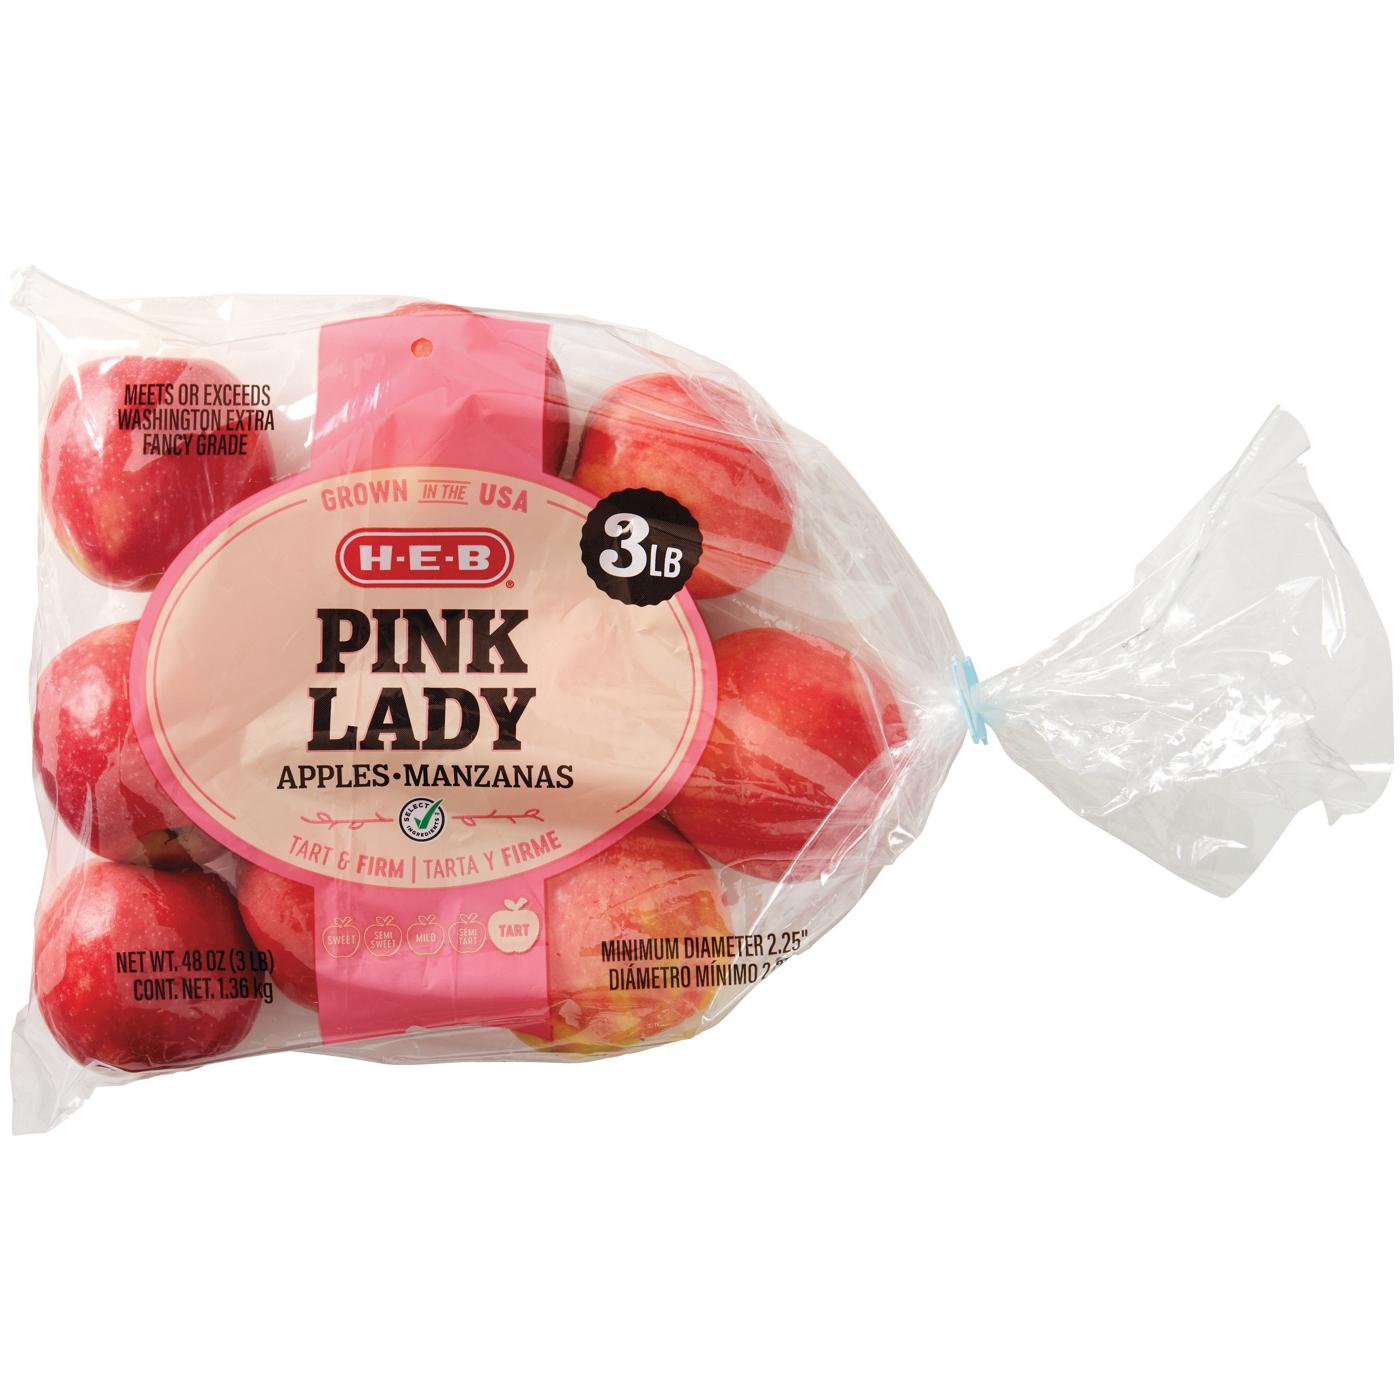 H-E-B Fresh Pink Lady Apples; image 1 of 2